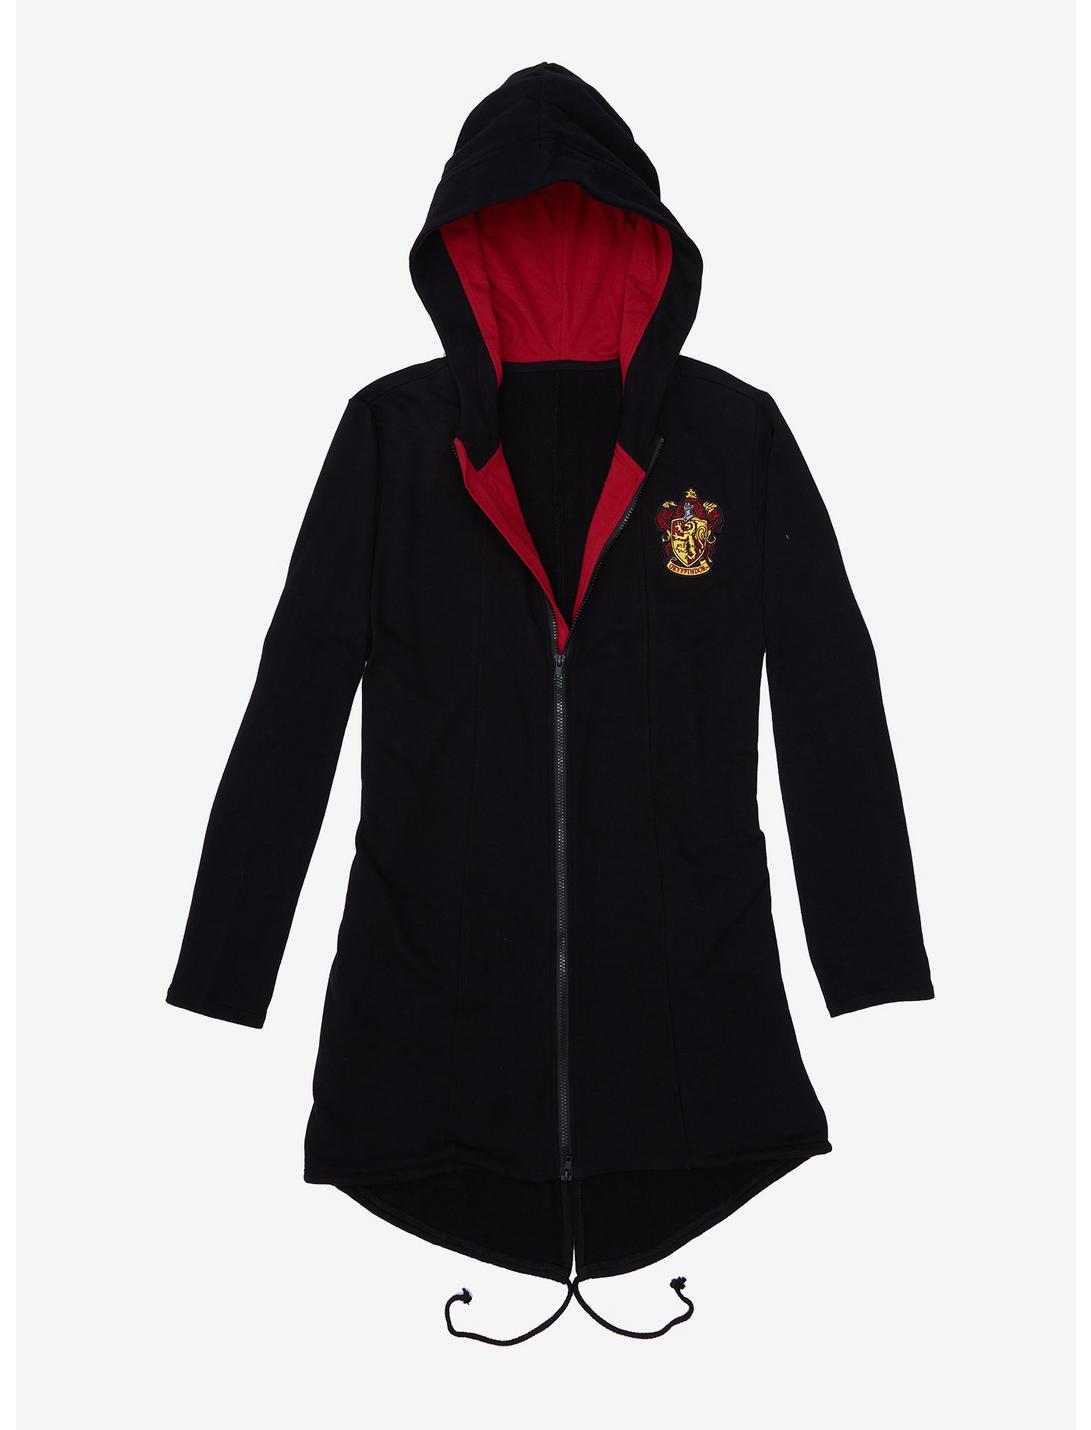 Harry Potter Gryffindor Zip-Up Hoodie Cloak, RED, hi-res